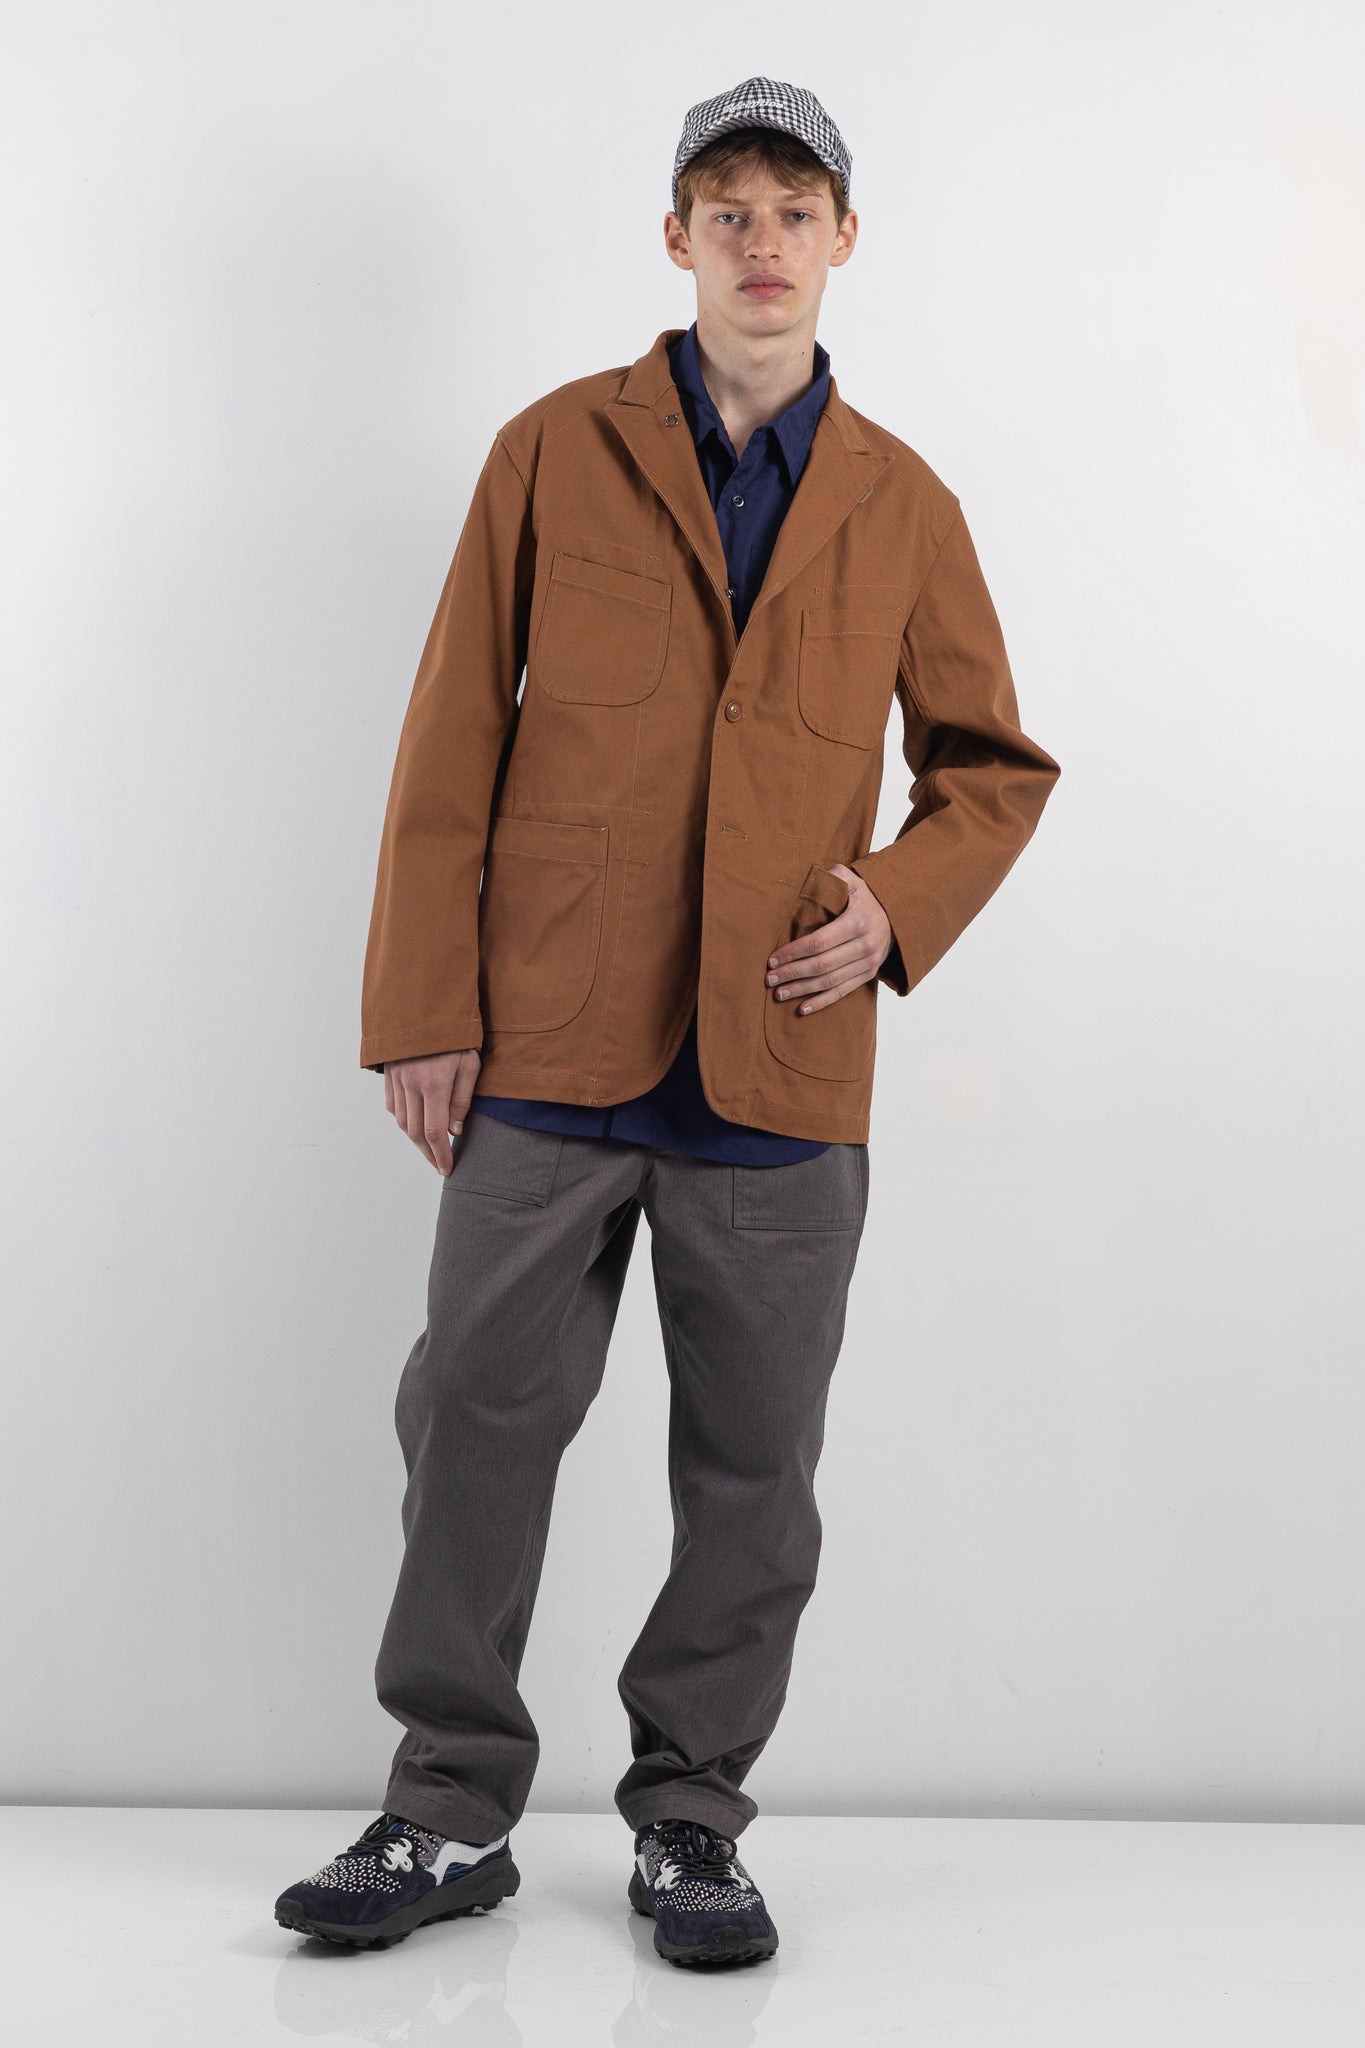 Mens jacket | Engineered Garments Bedford Jacket | The Standard Store